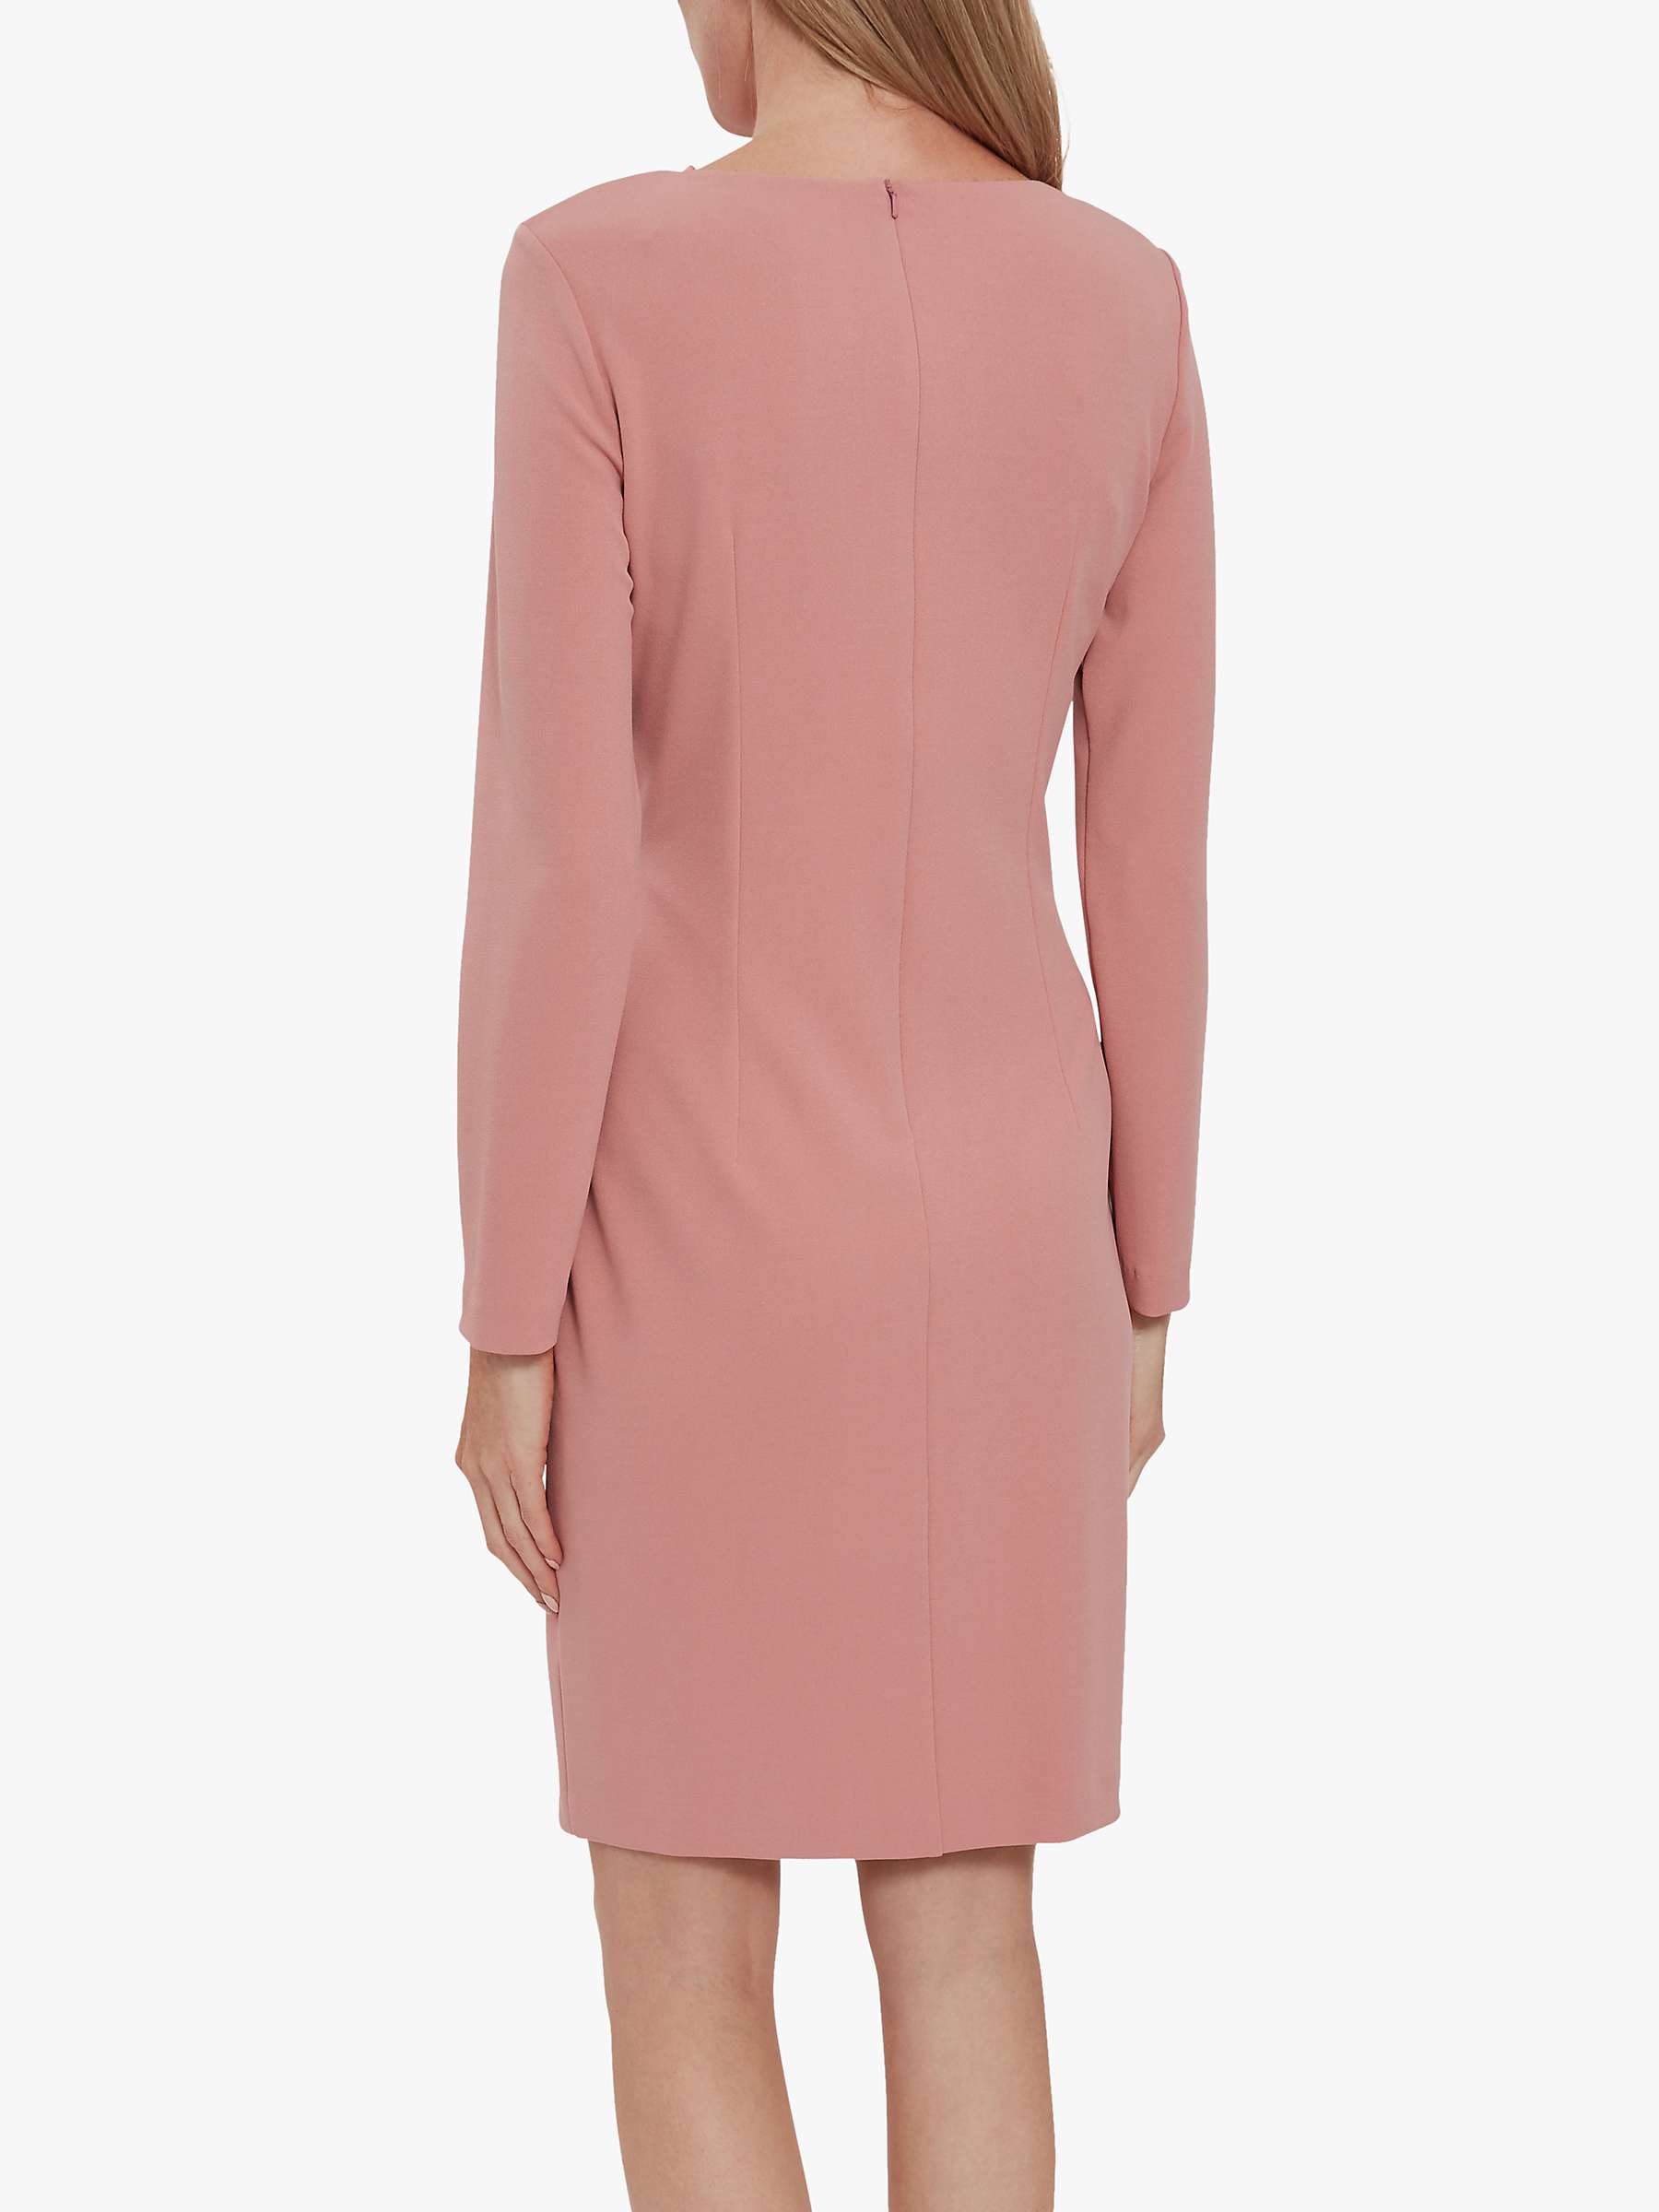 Buy Gina Bacconi Eliane Crepe Peplum Dress Online at johnlewis.com